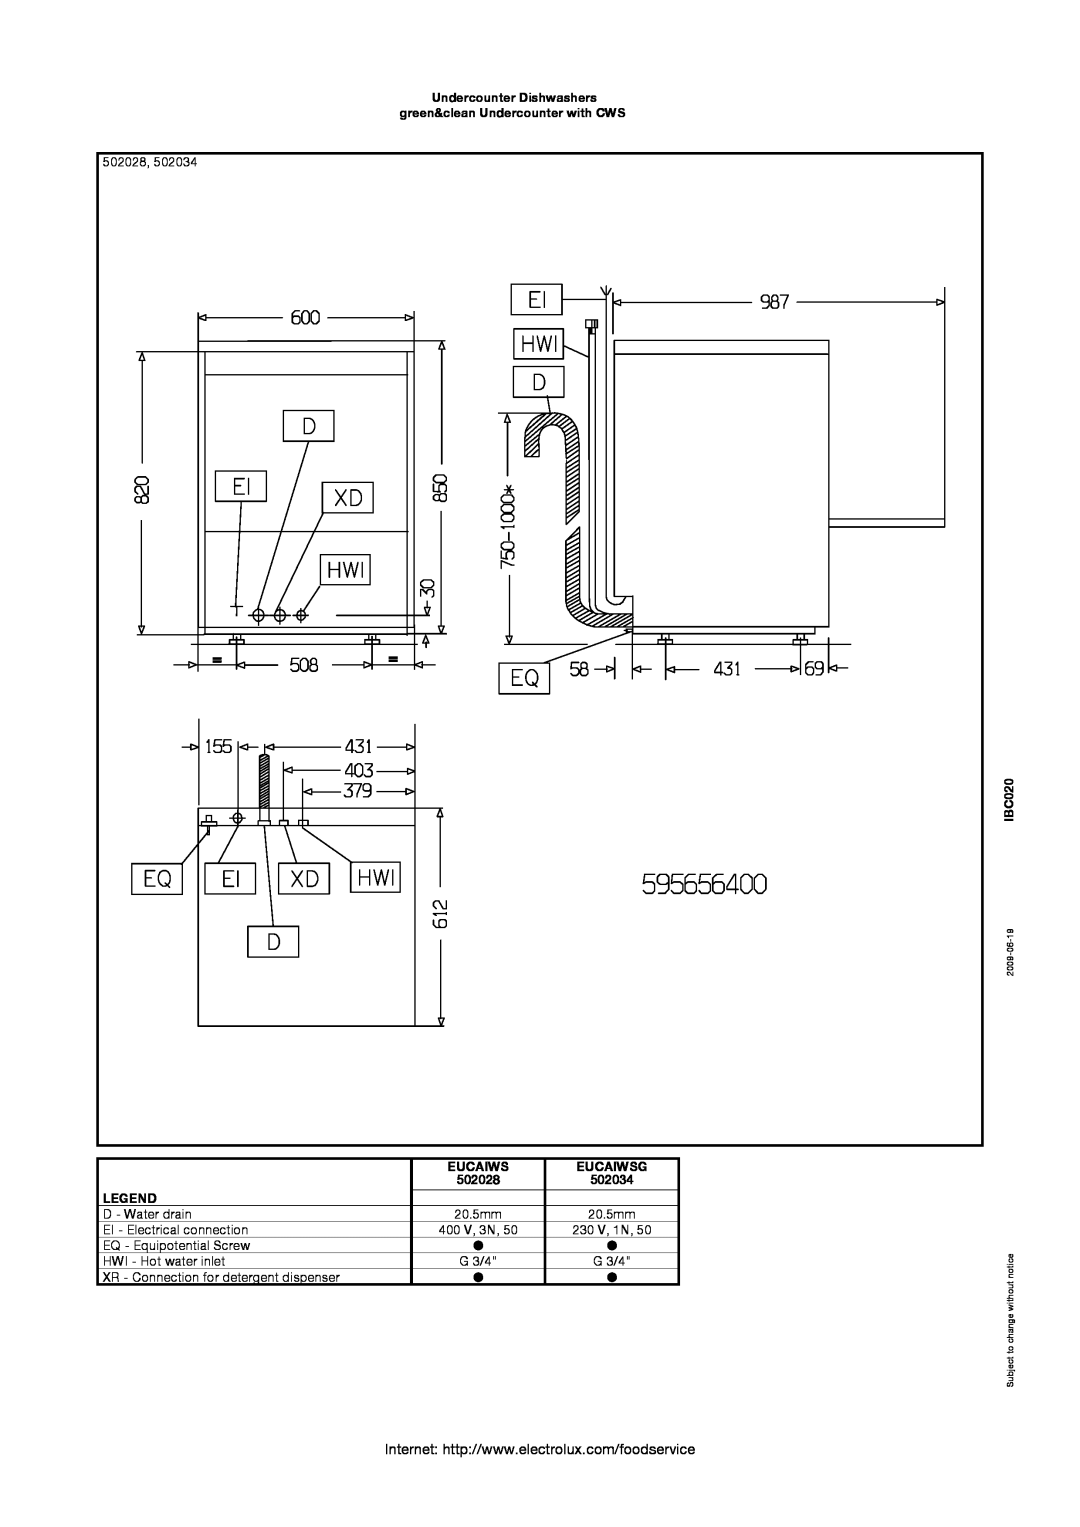 Electrolux EUCAIWS manual Undercounter Dishwashers, green&clean Undercounter with CWS, IBC020, Eucaiwsg, 502028, 502034 